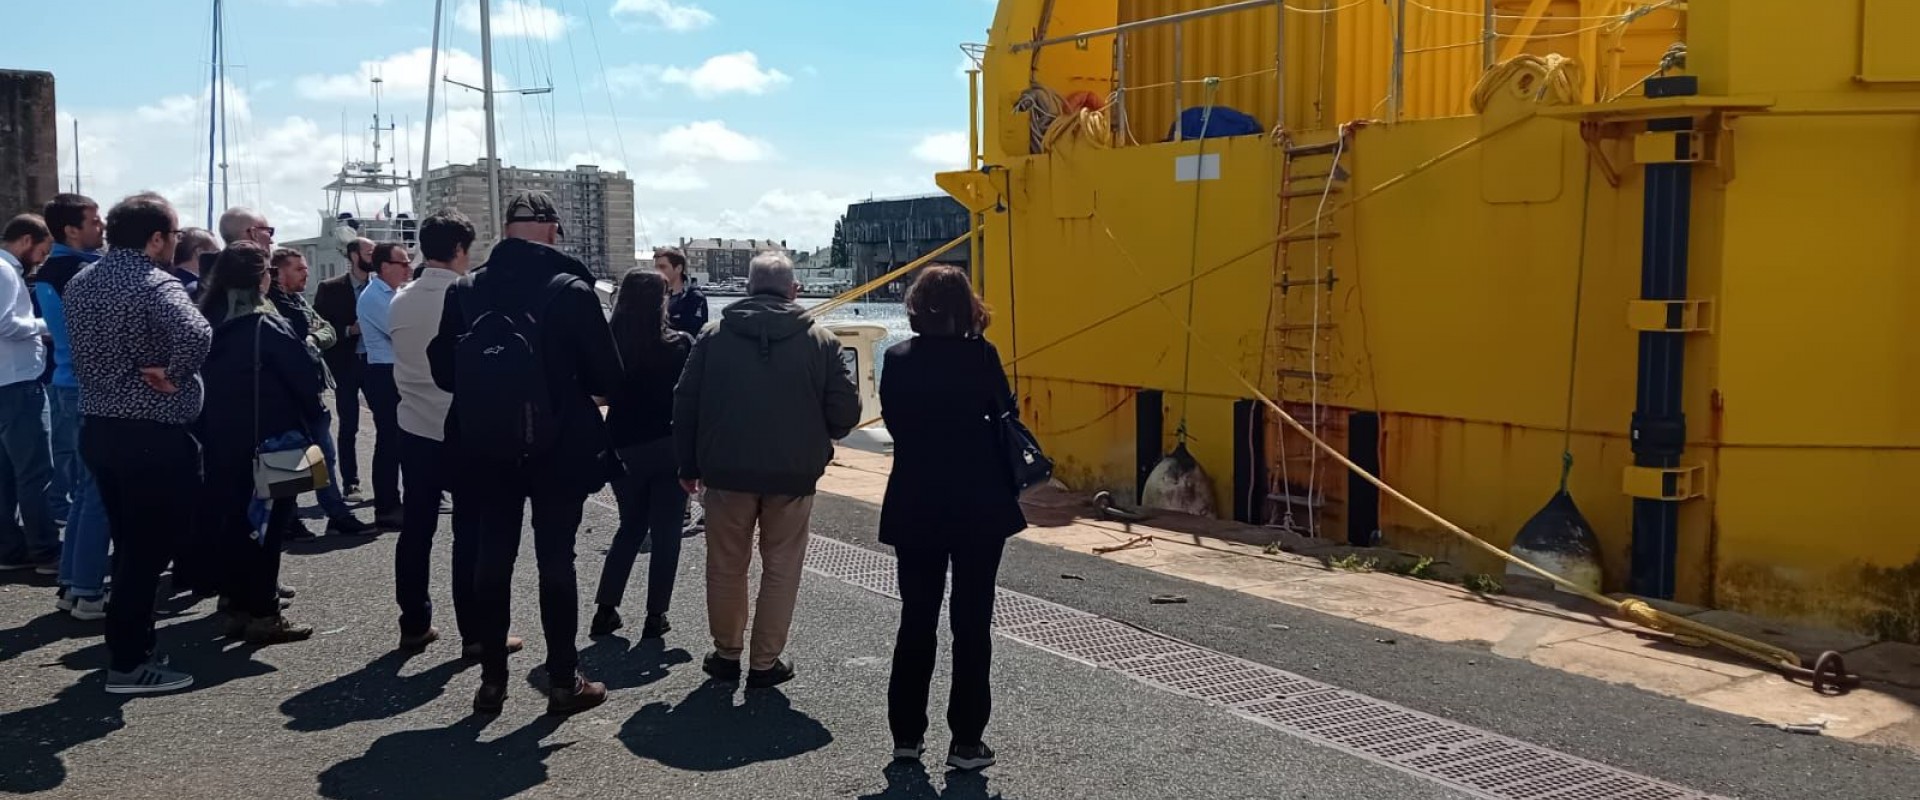 Nantes ‒ Saint Nazaire Port Takes Part in the BlueDay Event